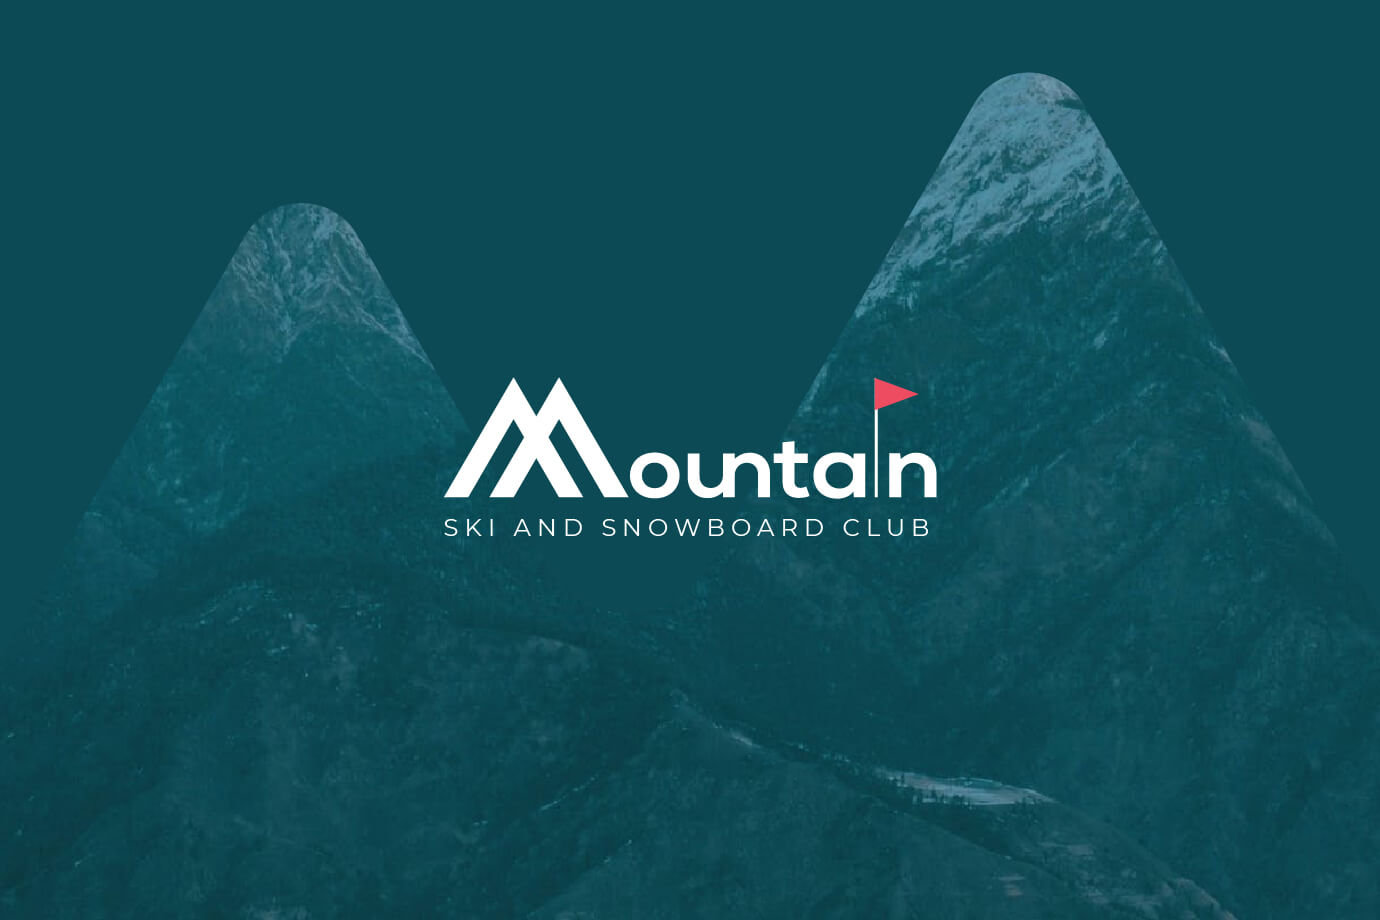 Mountain Snowboard Club branding by sajid sulaiman - Digital Media Production